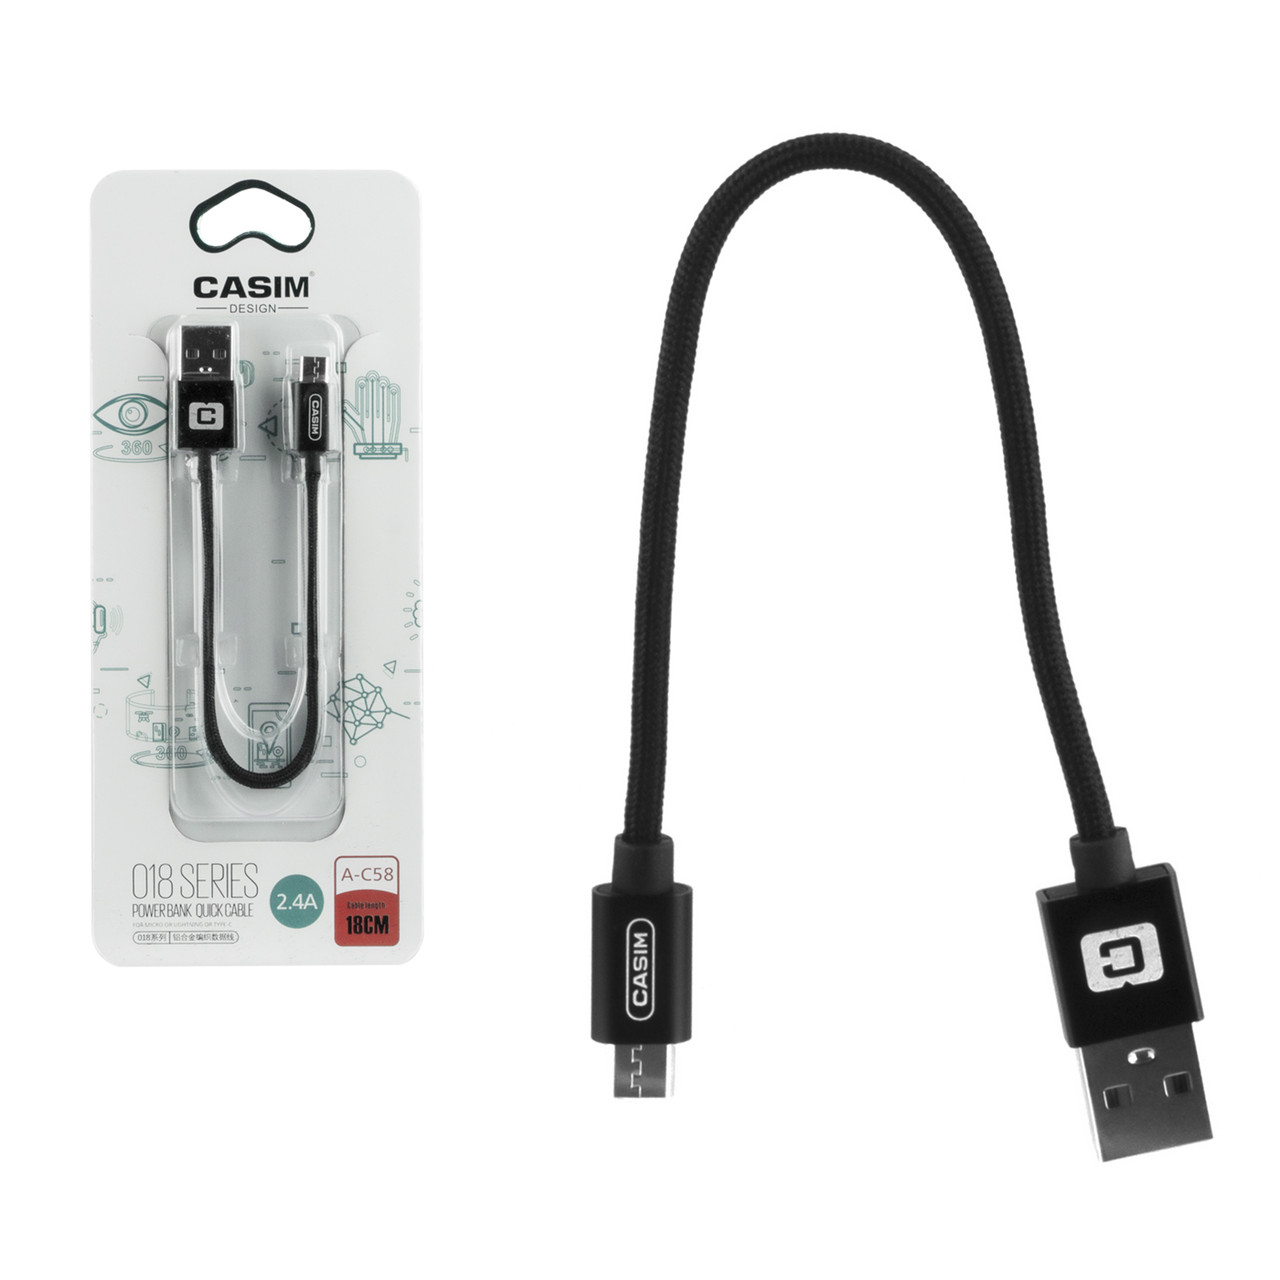 Кабель Micro USB Casim A-C-58 18cm, Black